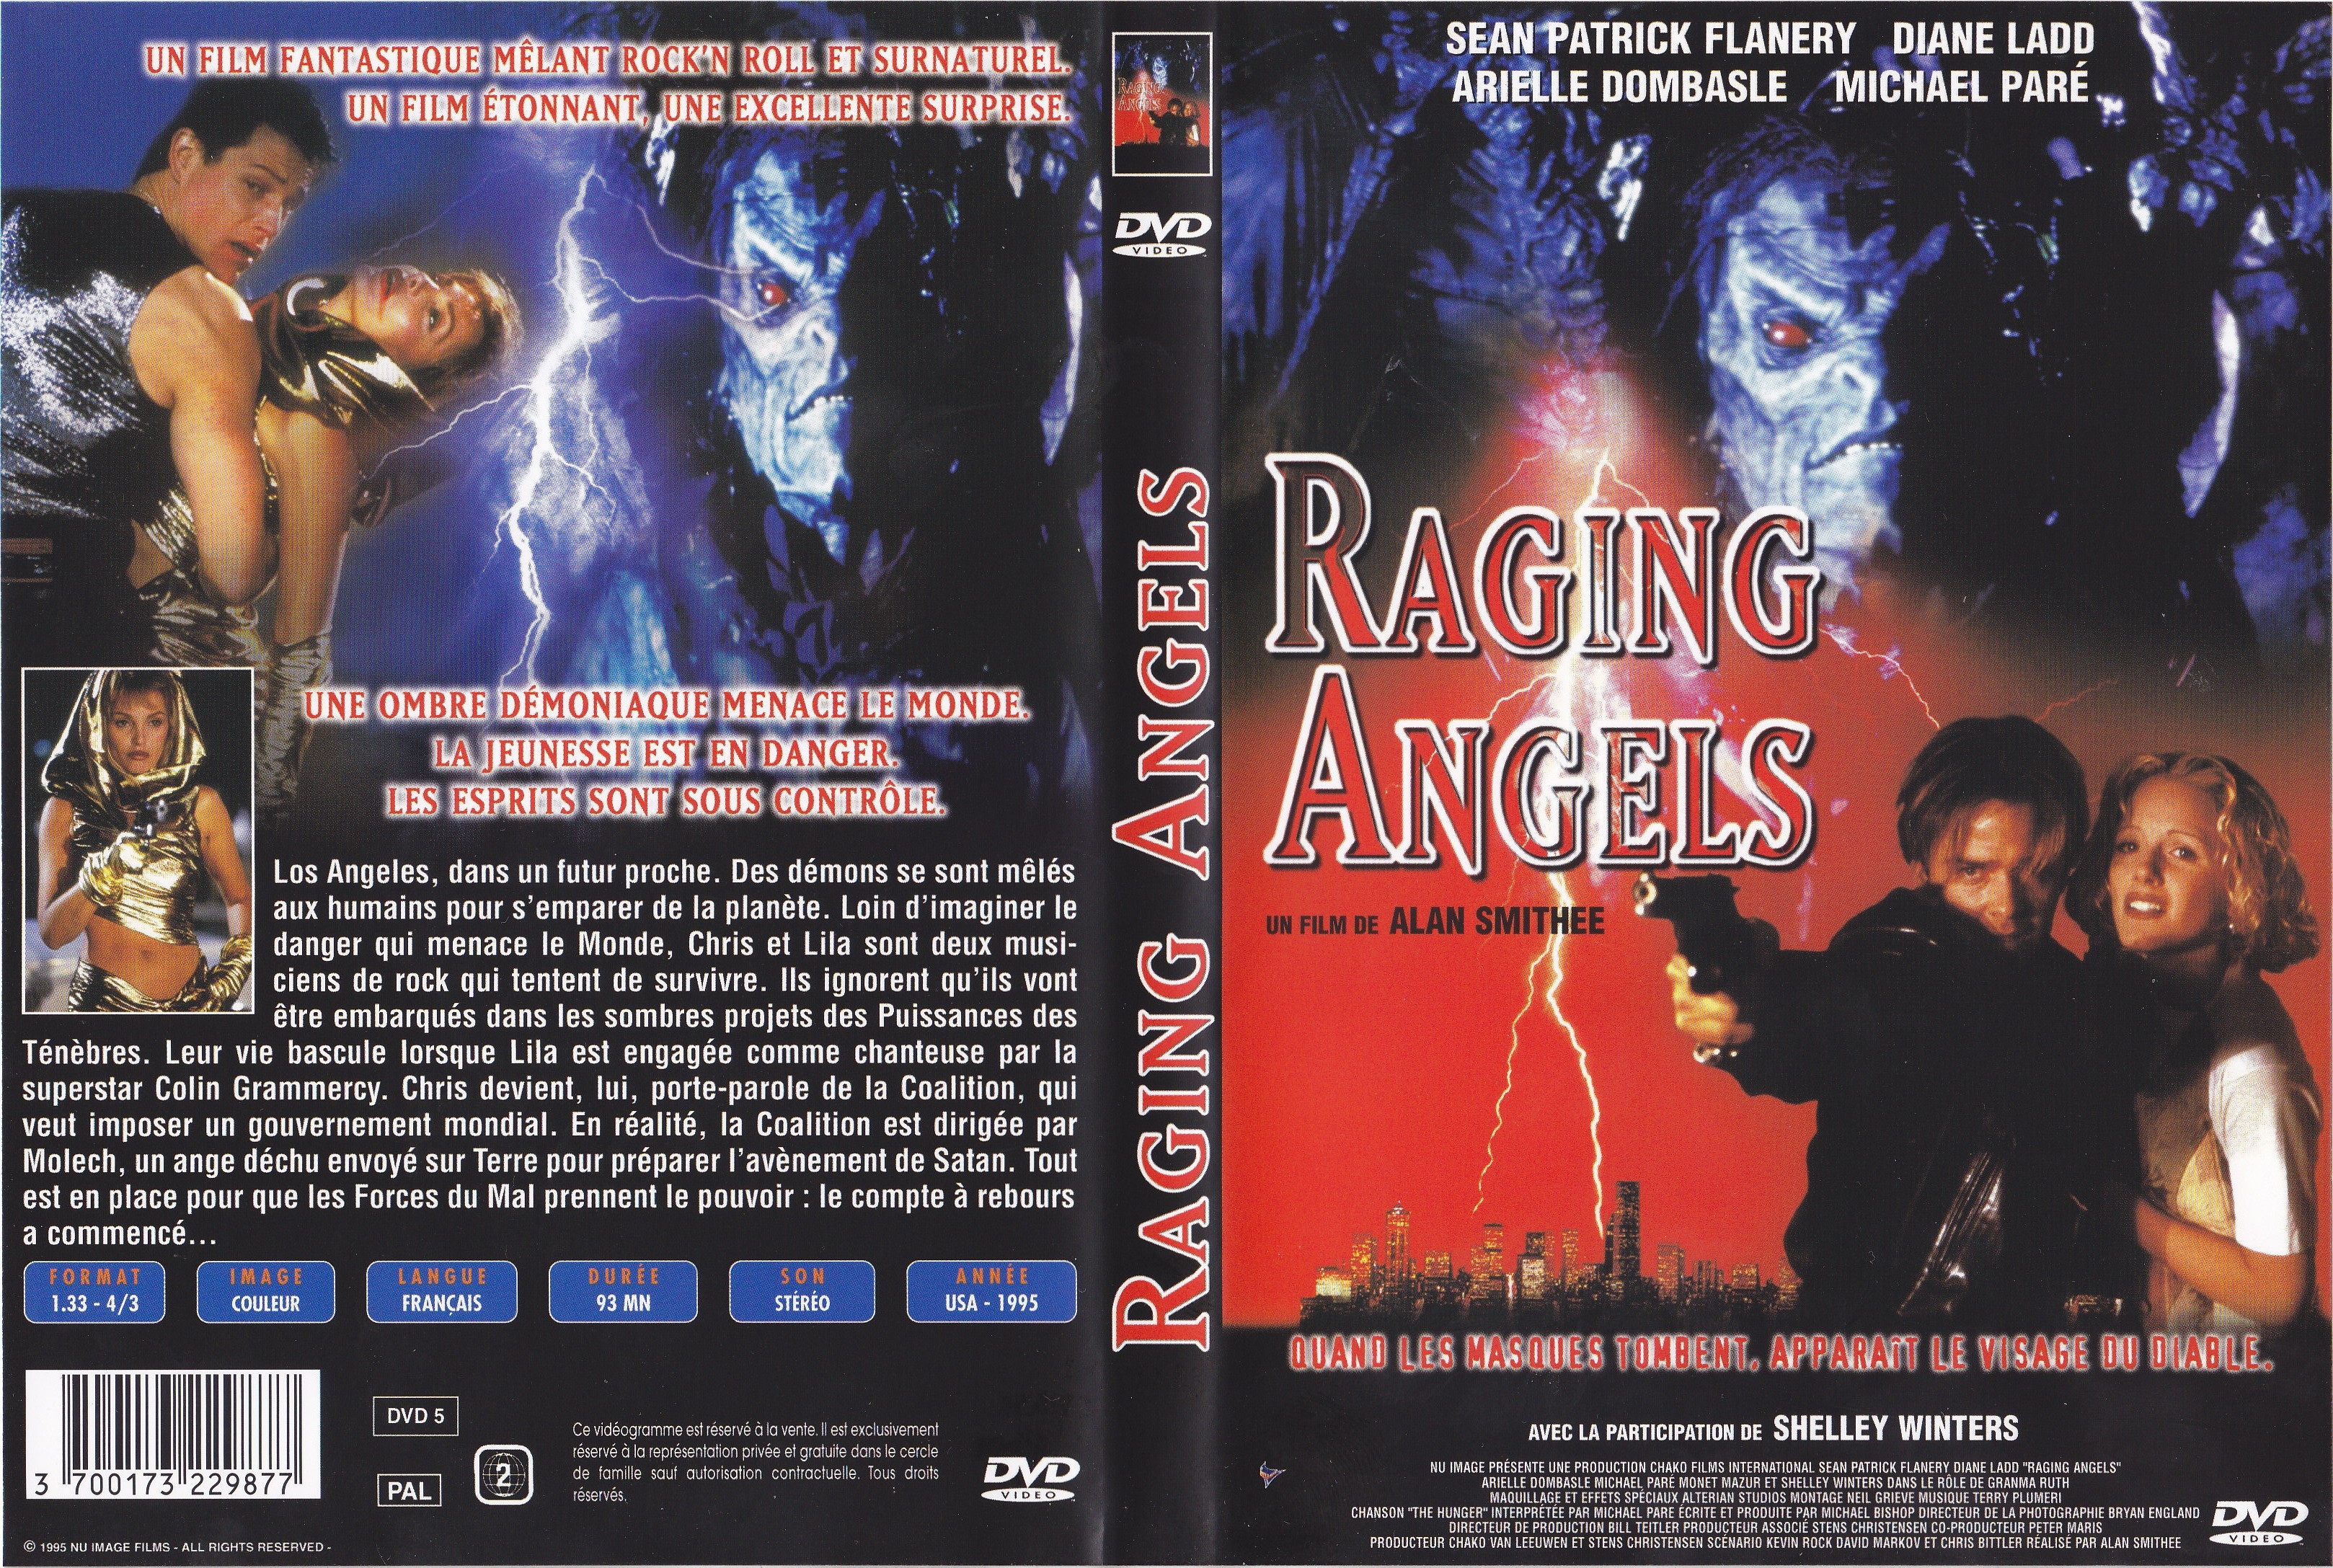 Jaquette DVD Raging Angels